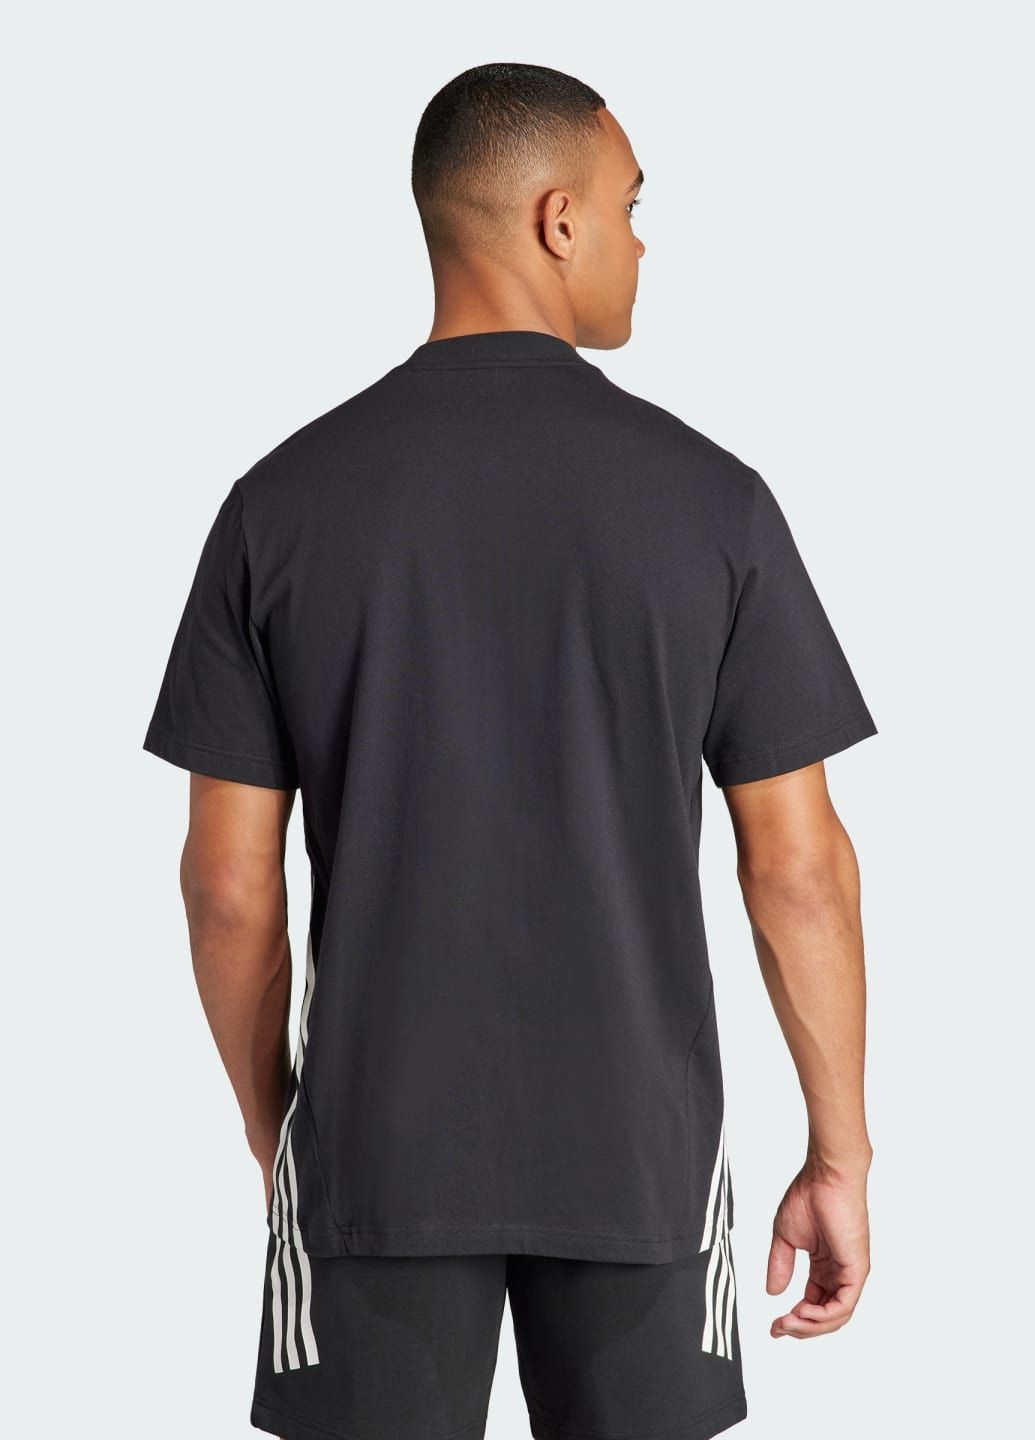 Черная футболка future icons 3-stripes adidas